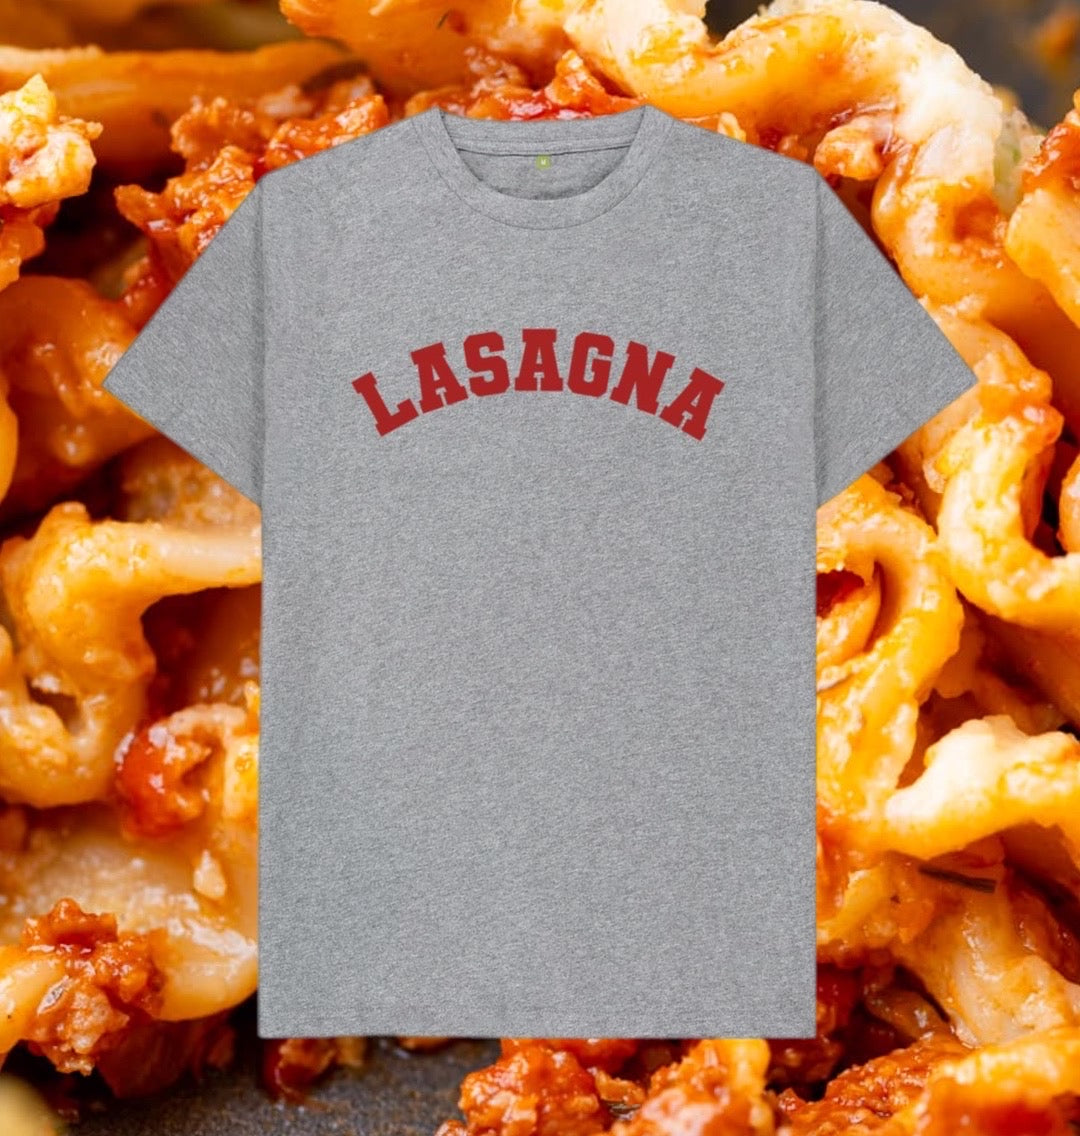 Lasagna varsity t-shirt